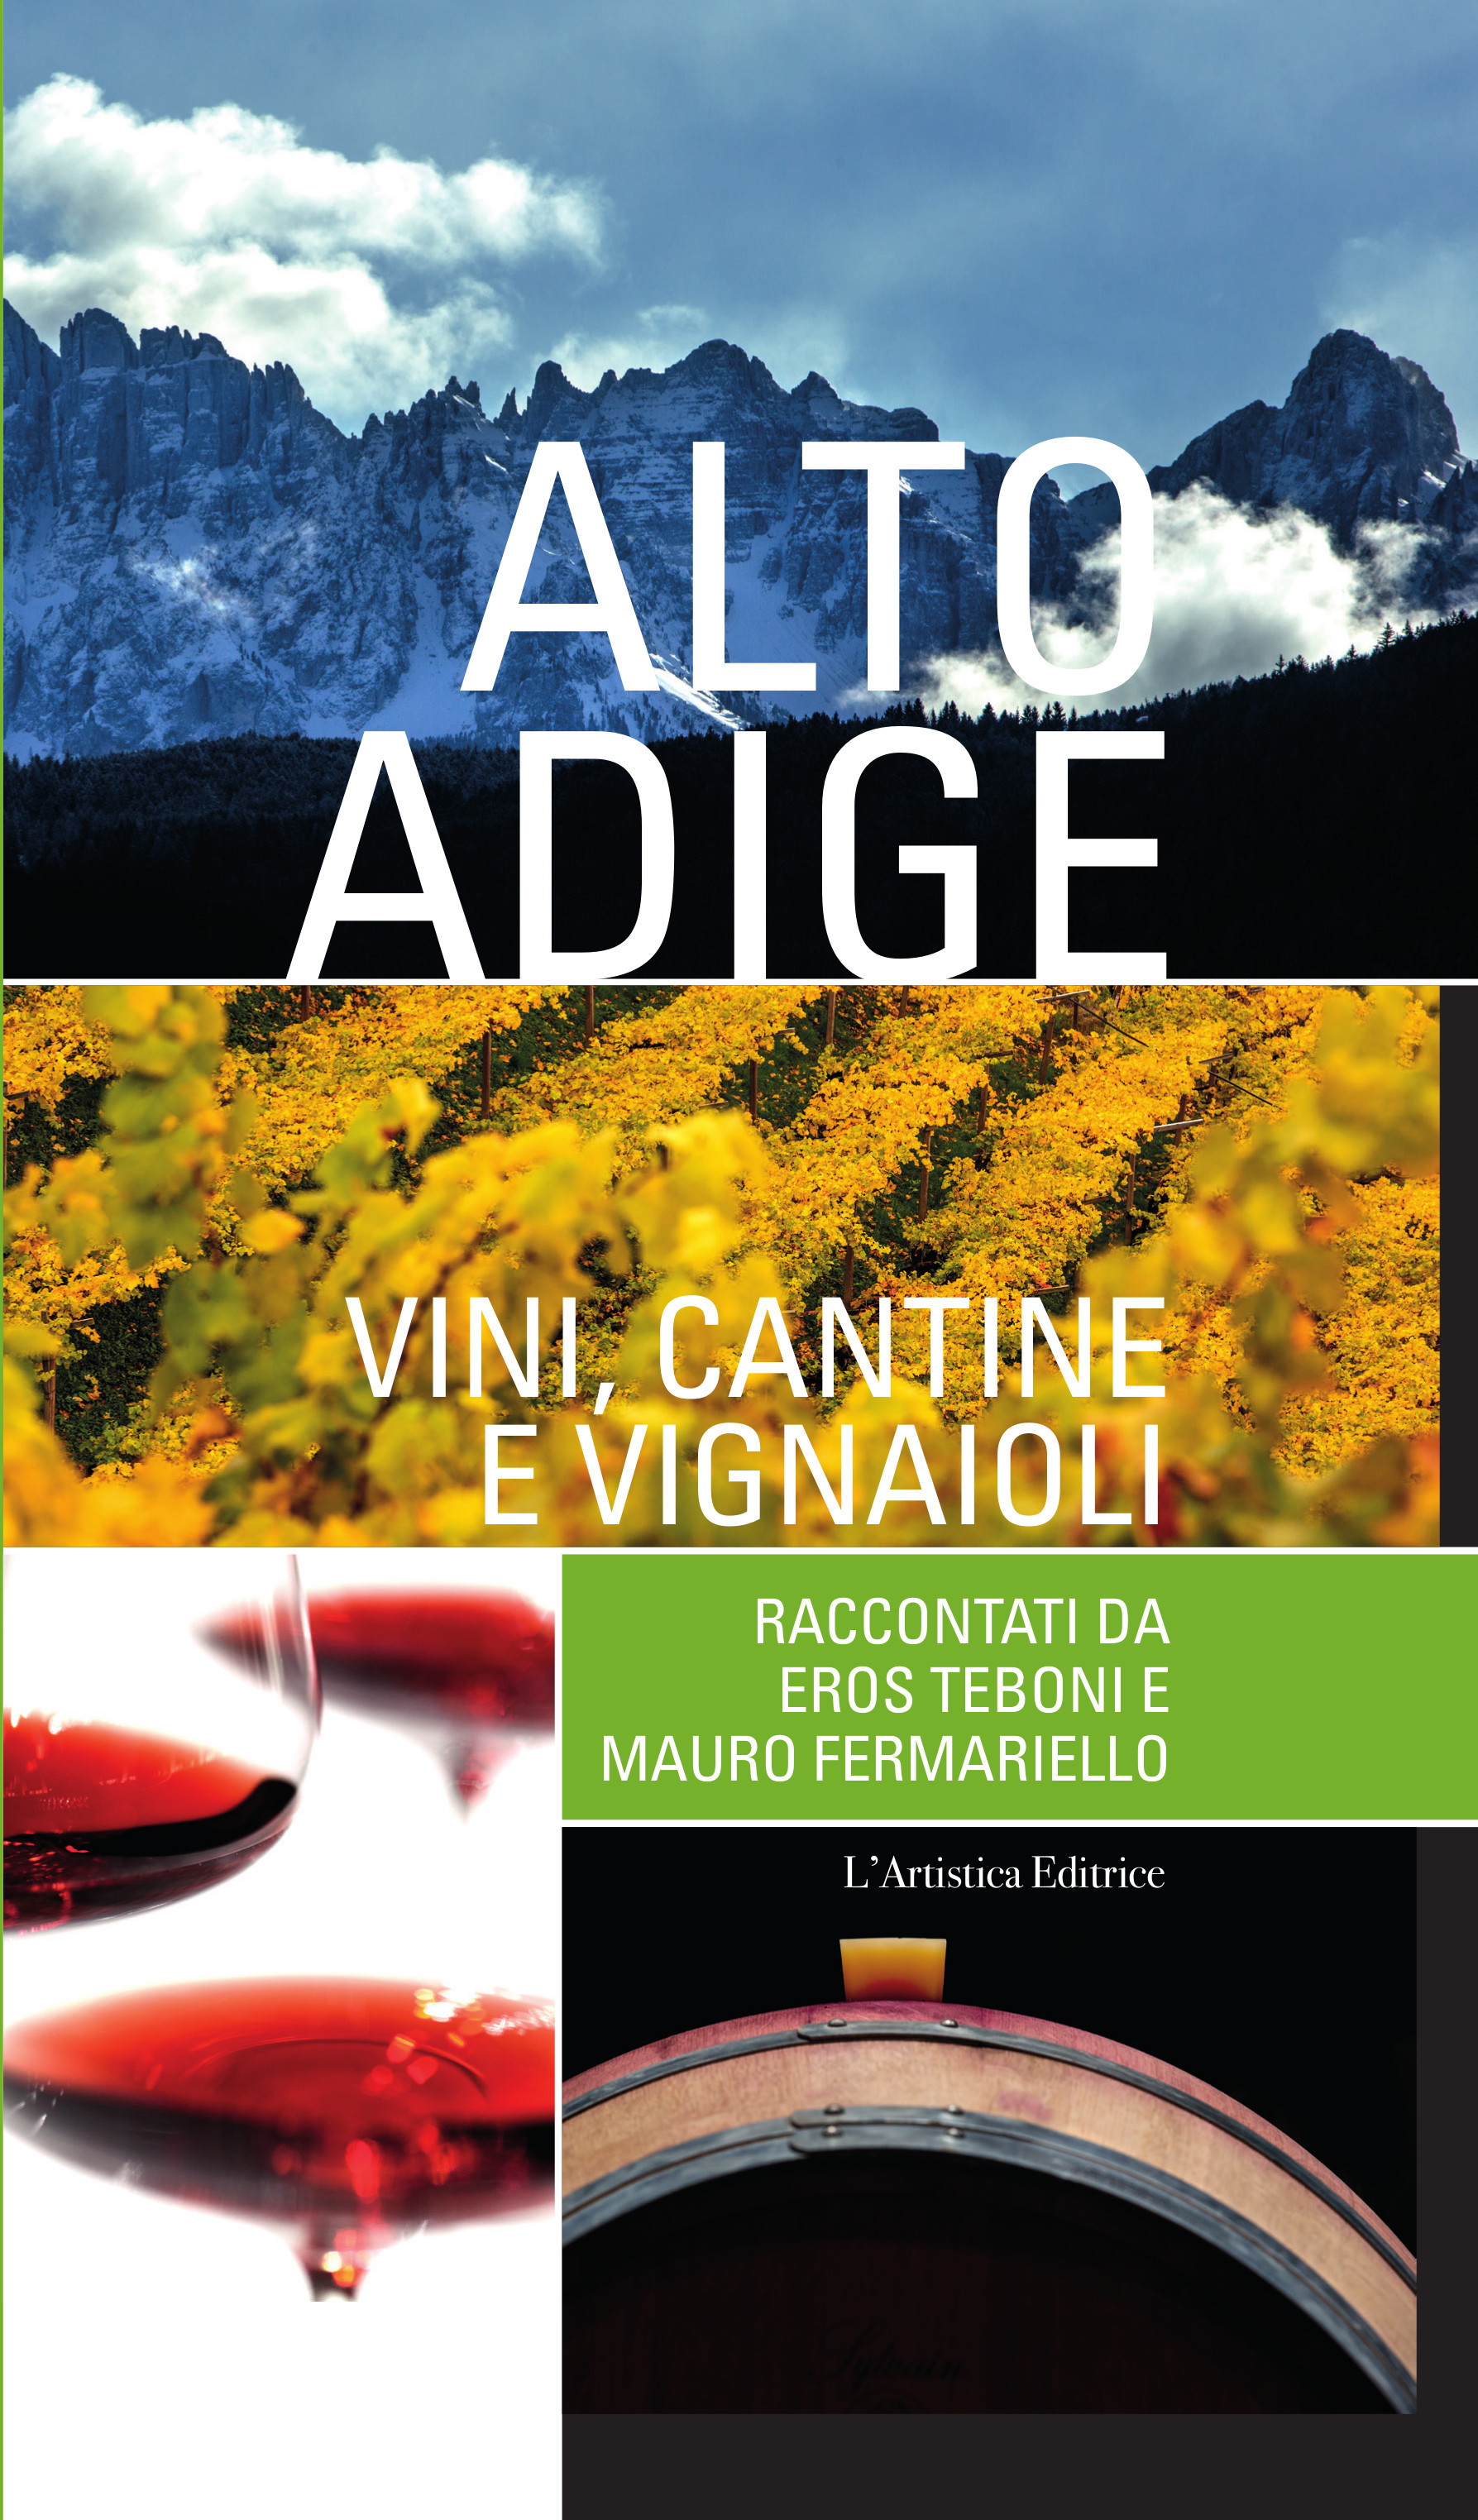 Alto Adige – Vini cantine e vignaioli